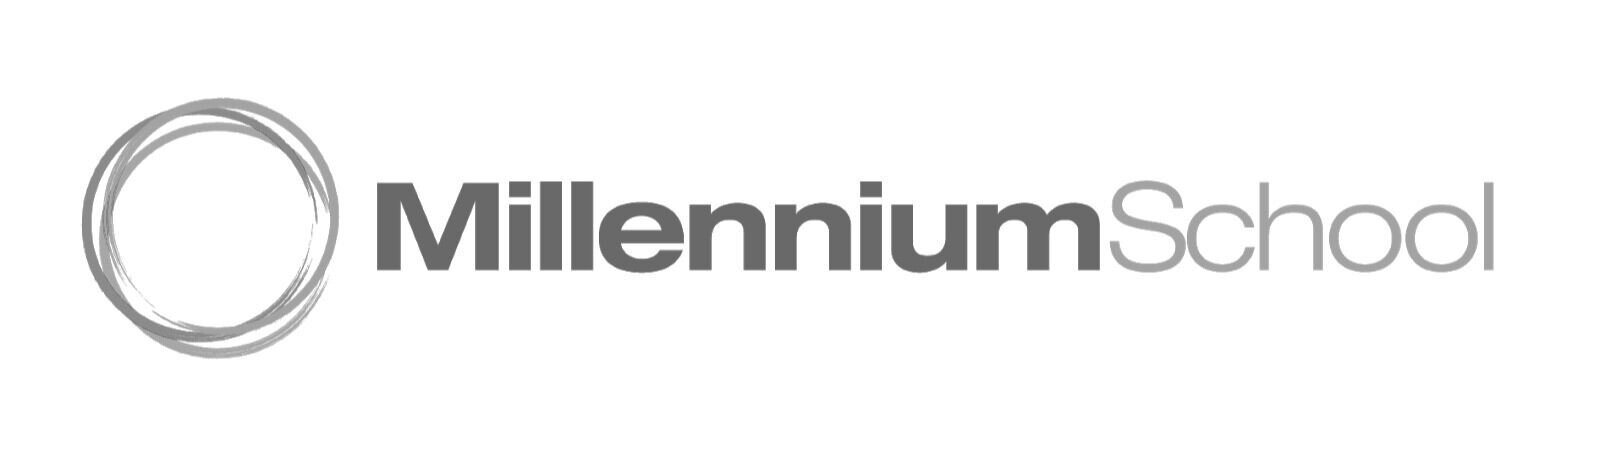 MillenniumSchool_logo_inline.jpg